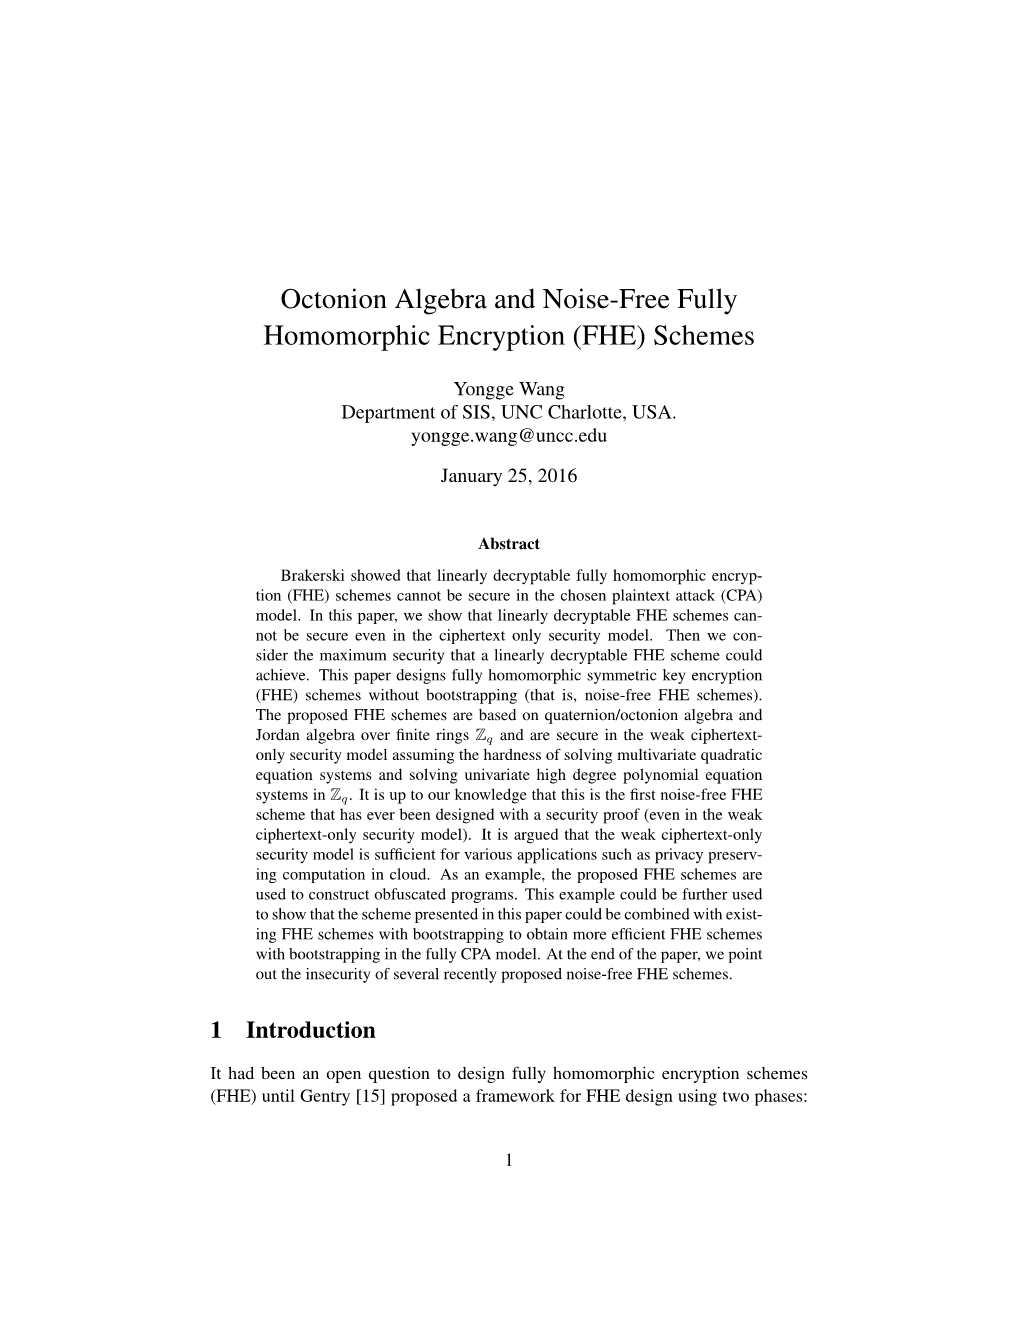 Octonion Algebra and Noise-Free Fully Homomorphic Encryption (FHE) Schemes